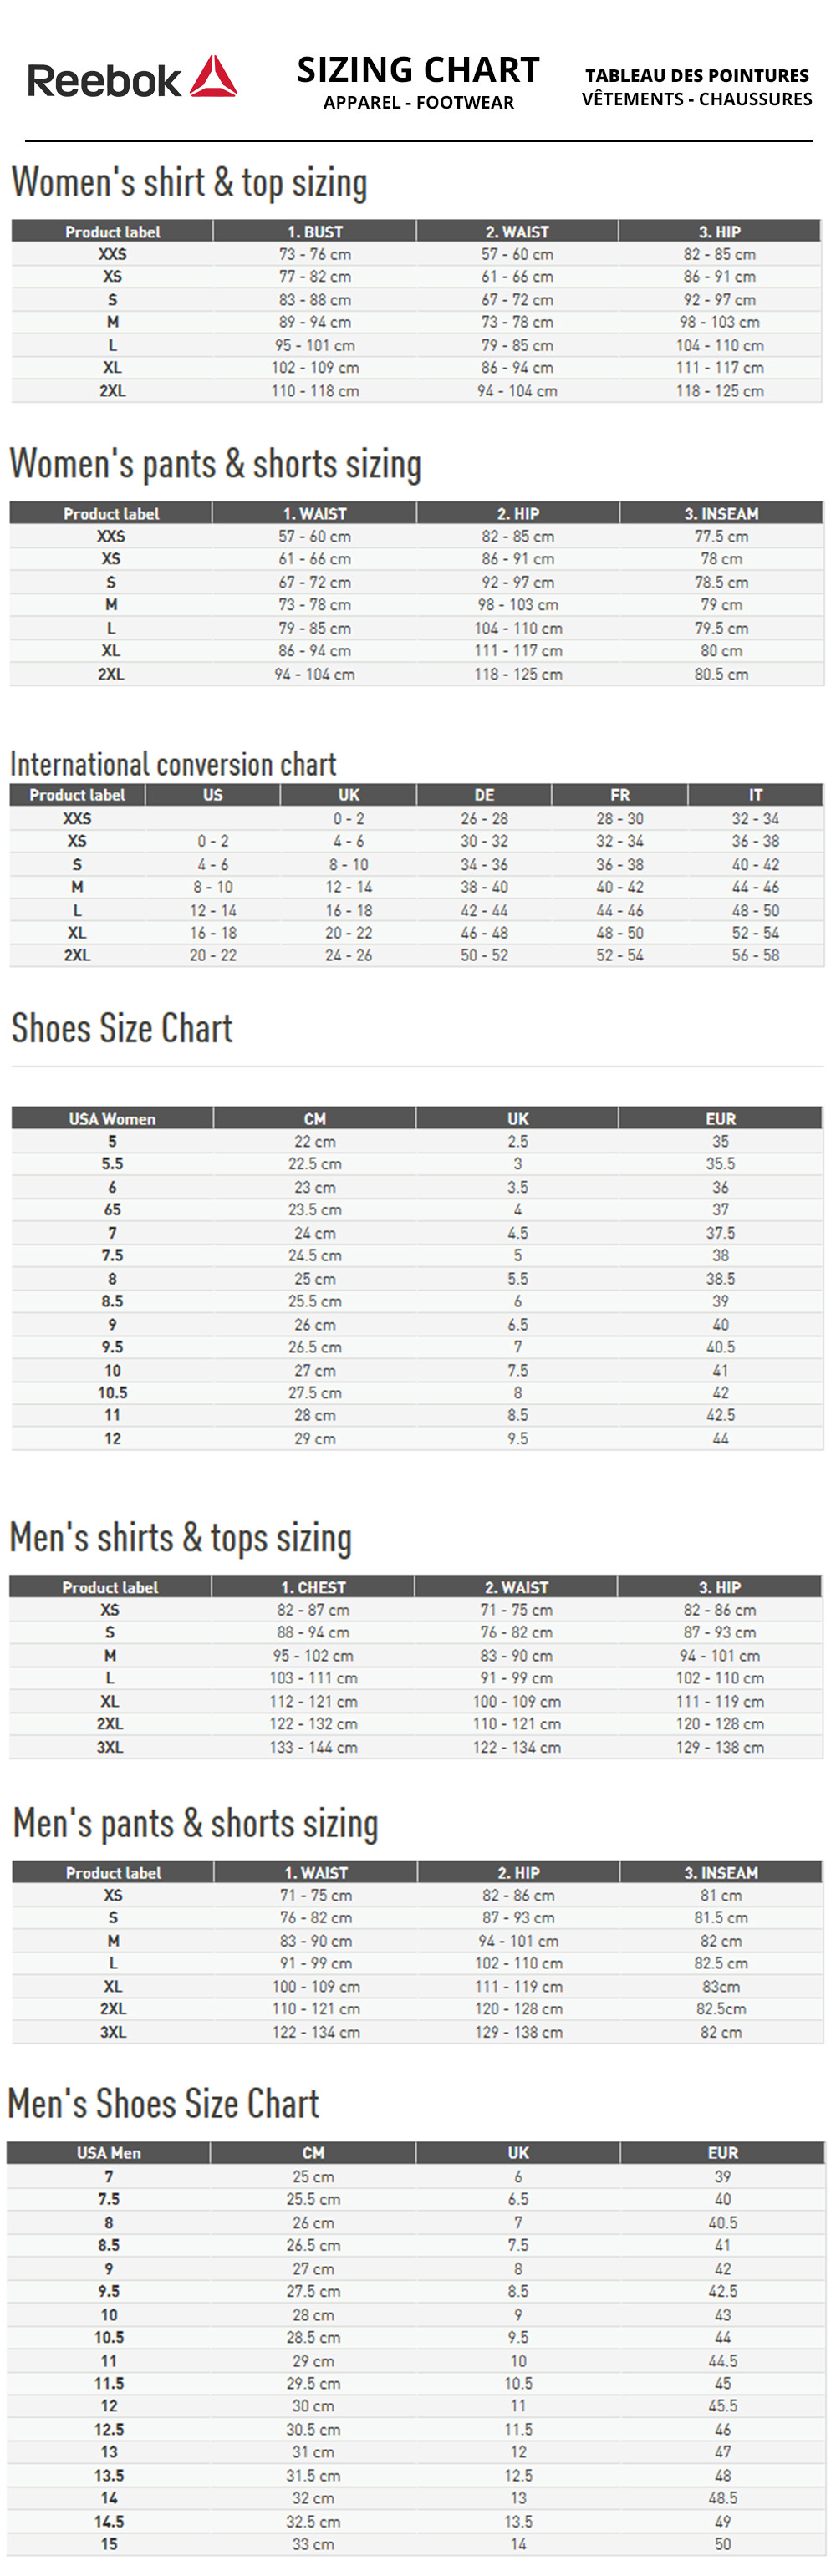 reebok baby shoes size chart